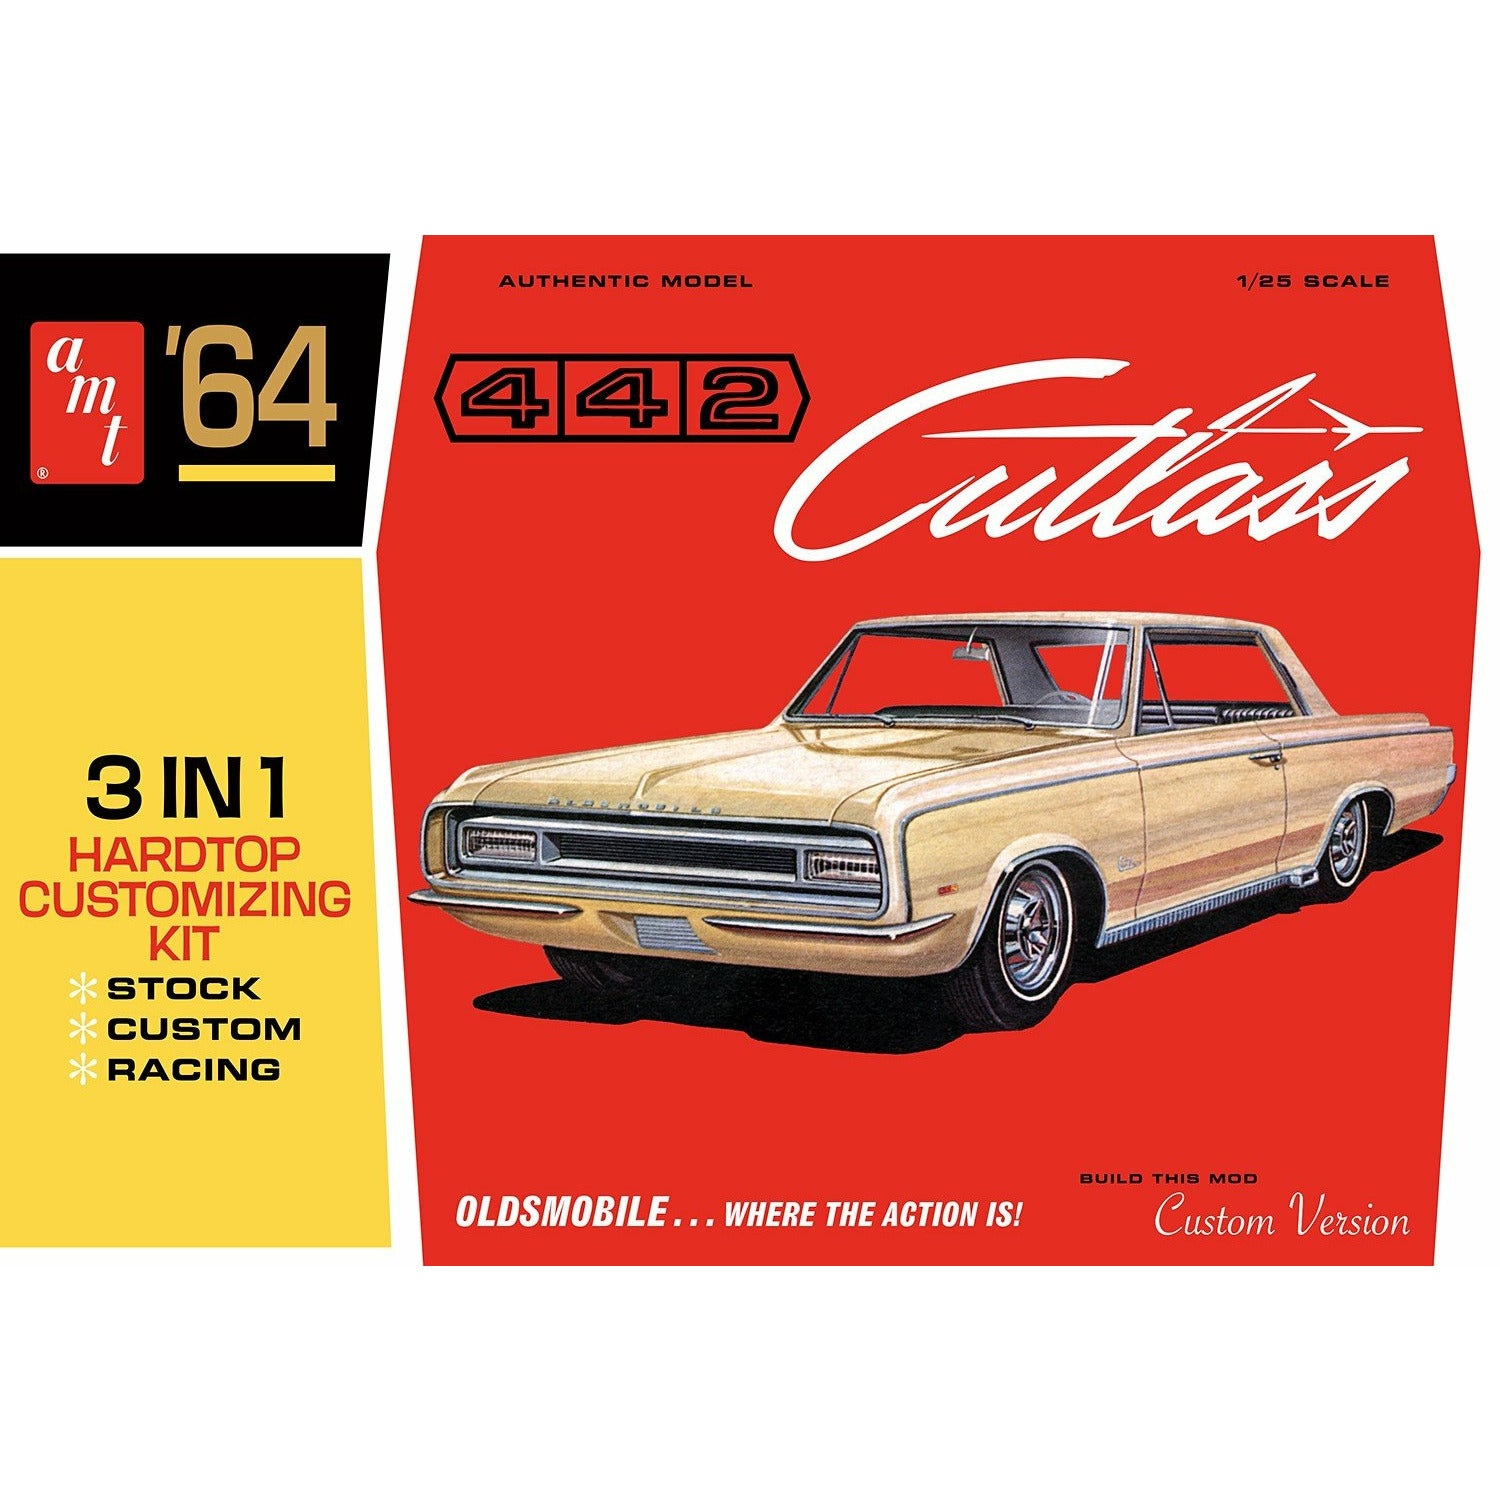 1964 Oldsmobile Cutlass Hardtop 1/25 Model Car Kit #1066/12 by AMT